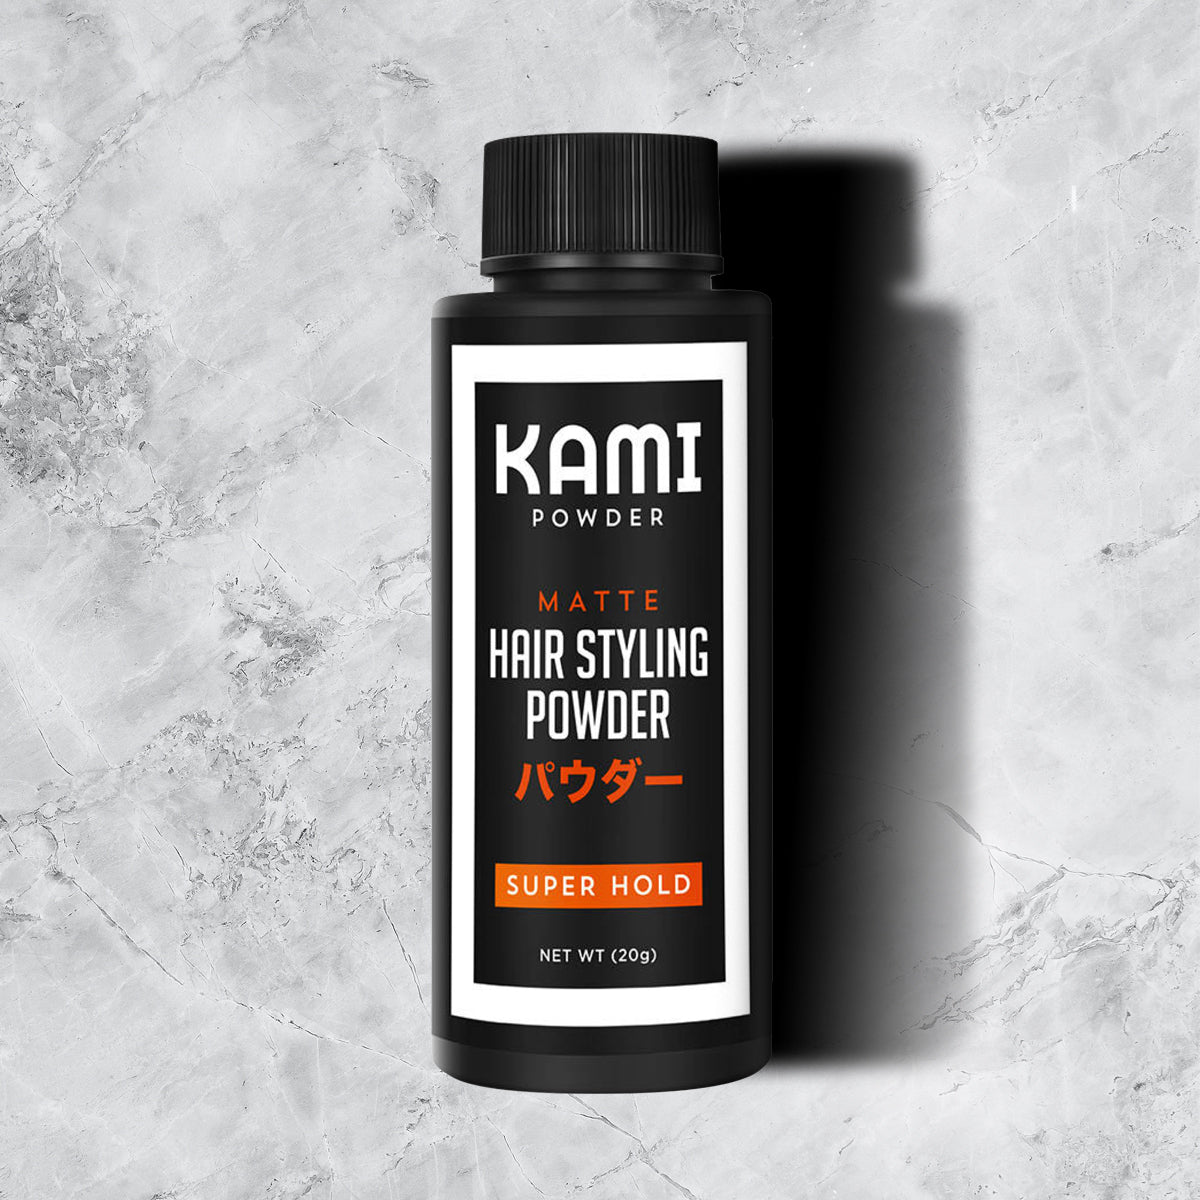 Kami Hair Styling Powder for Men